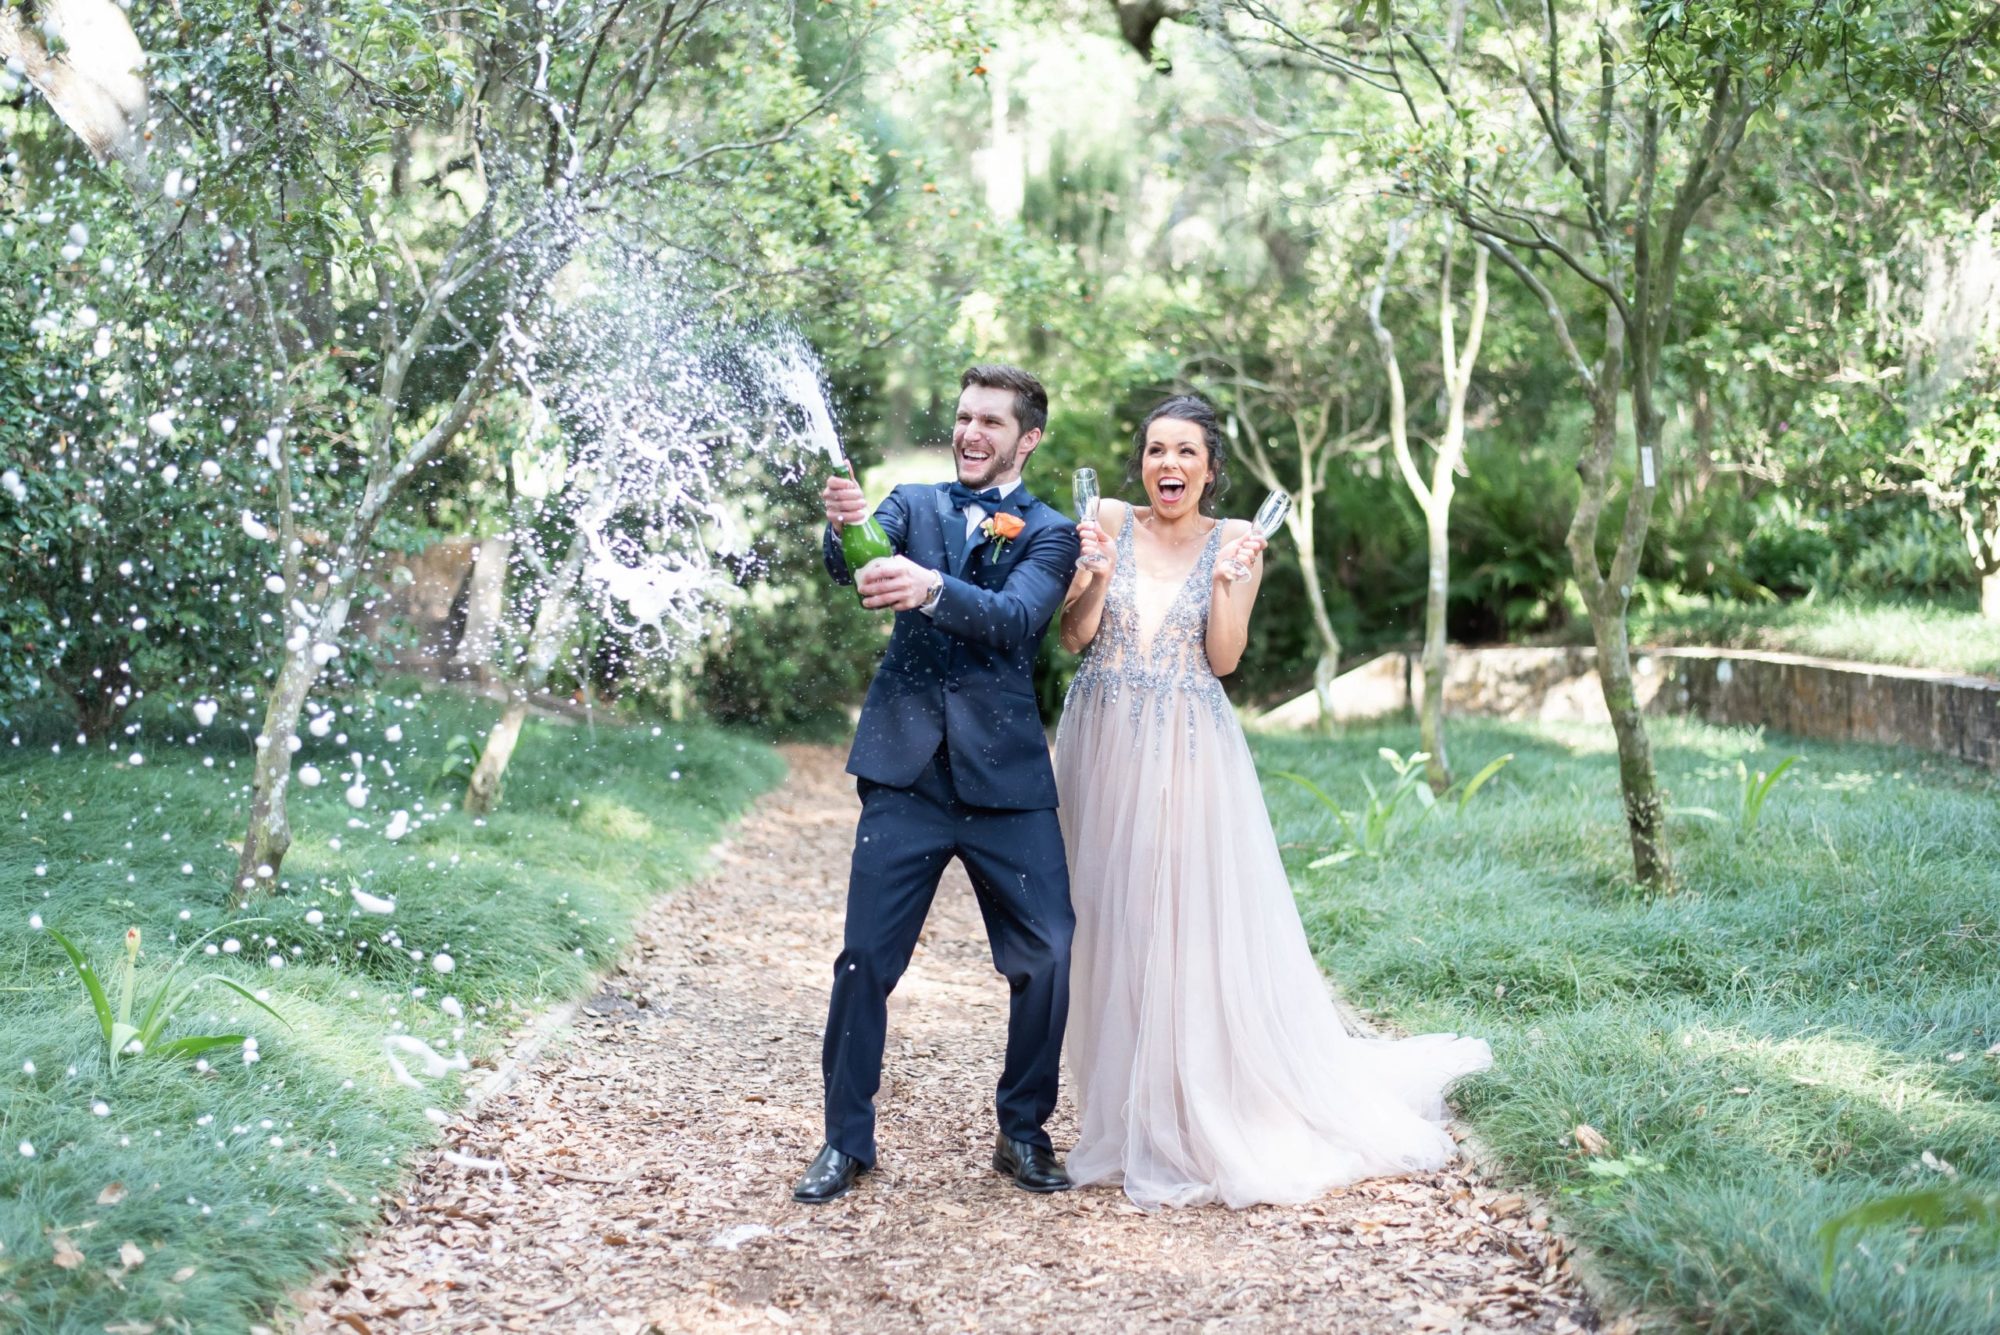 Bok tower garden wedding bride and groom pop the champagne photo in action capturing their reaction in orange grove garden